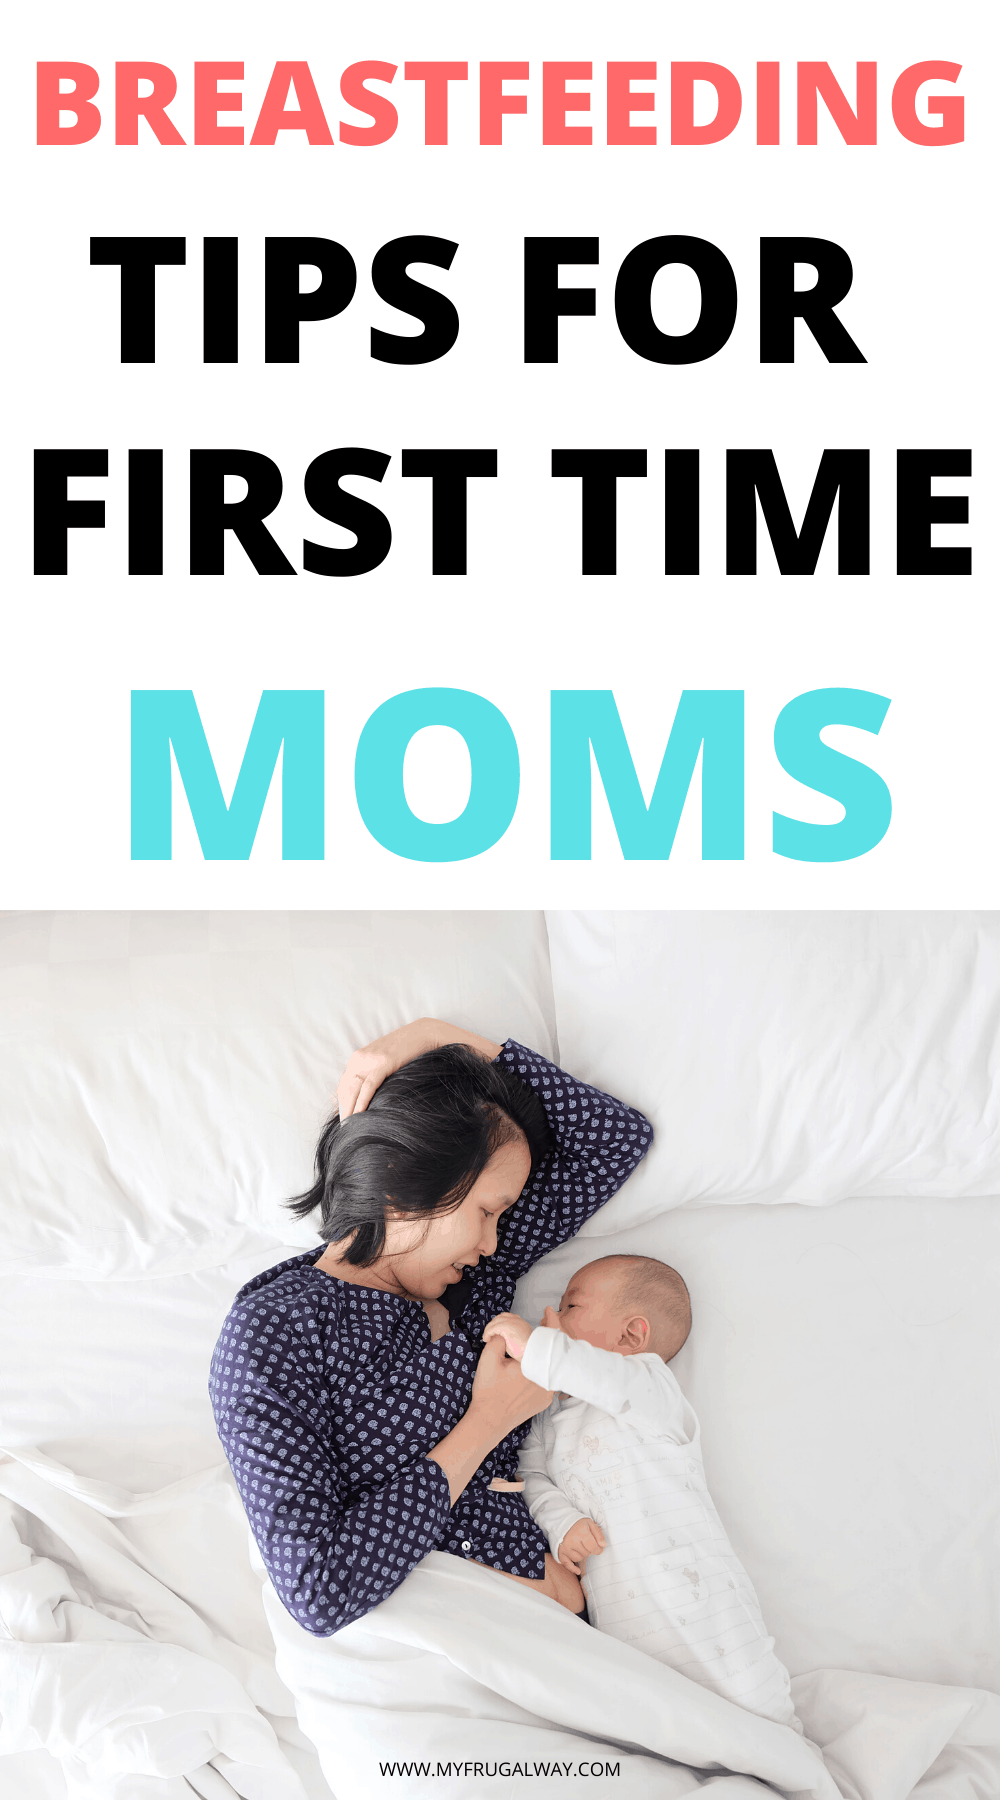 Breastfeeding tips for beginners, hacks for newborn latching for first time moms. Breastfeeding tips for success #breastfeeding #newborn #breastmilk #mom #newborn.